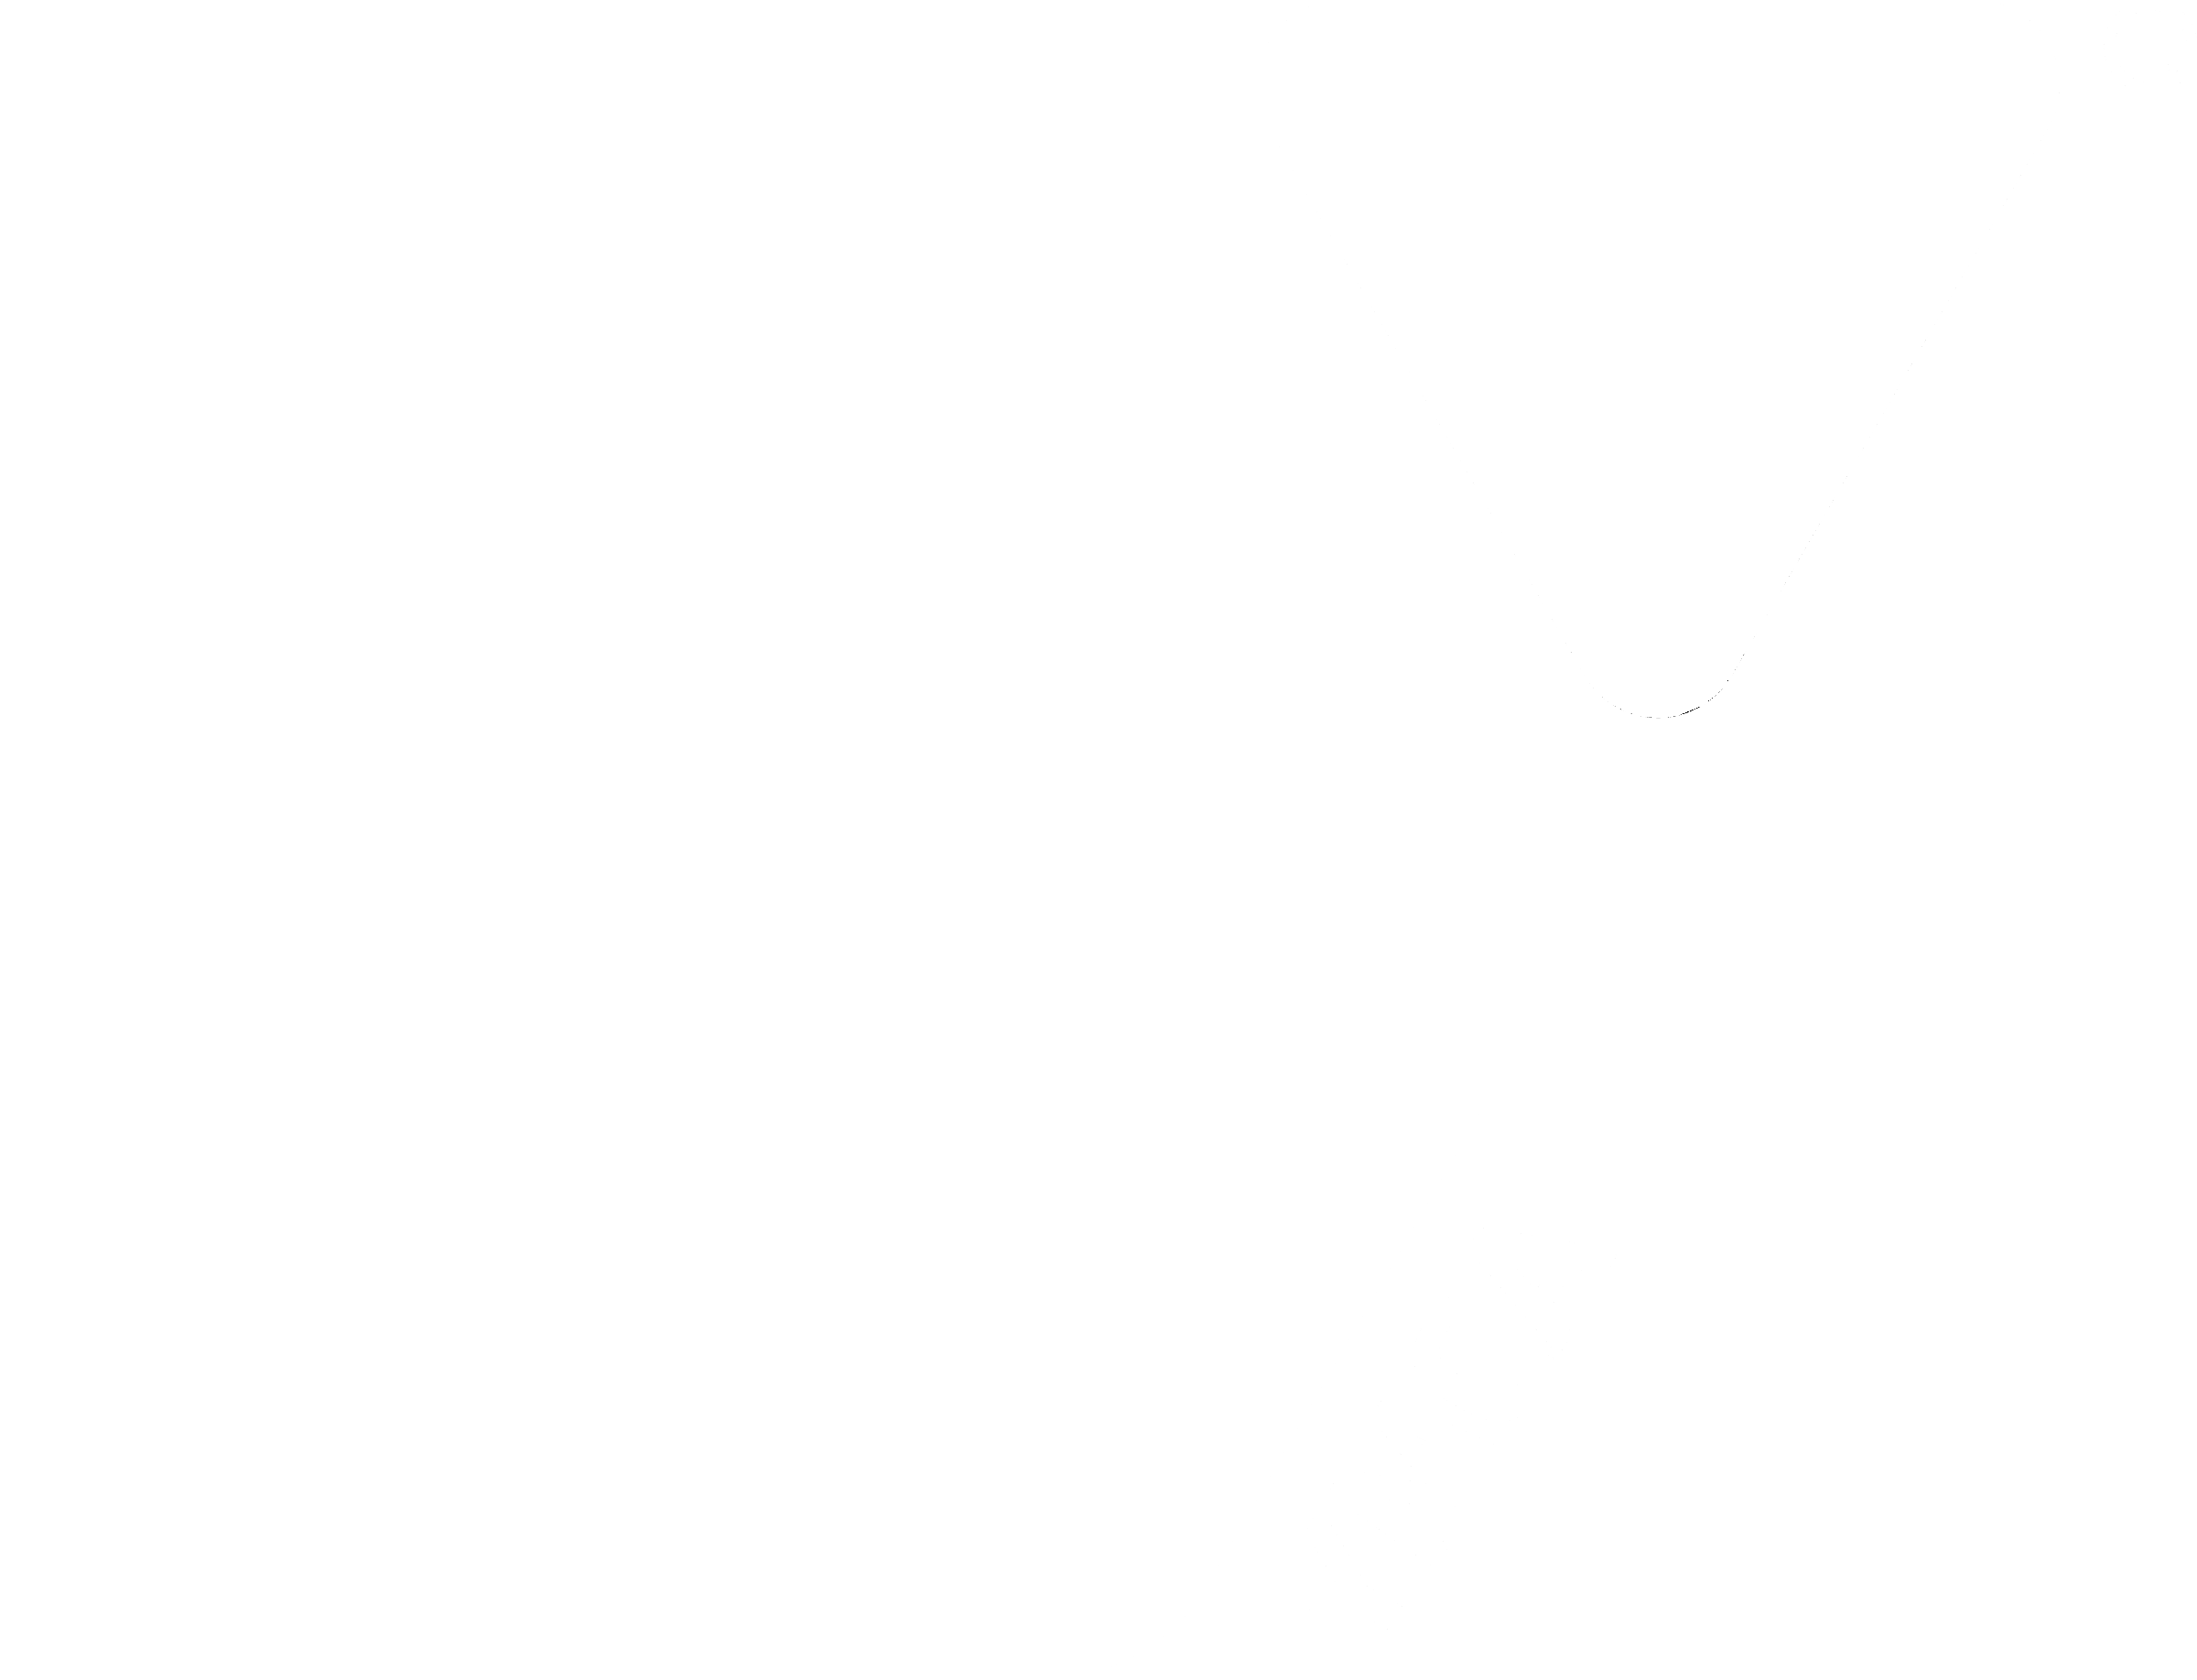 ymca-3-logo-black-and-white